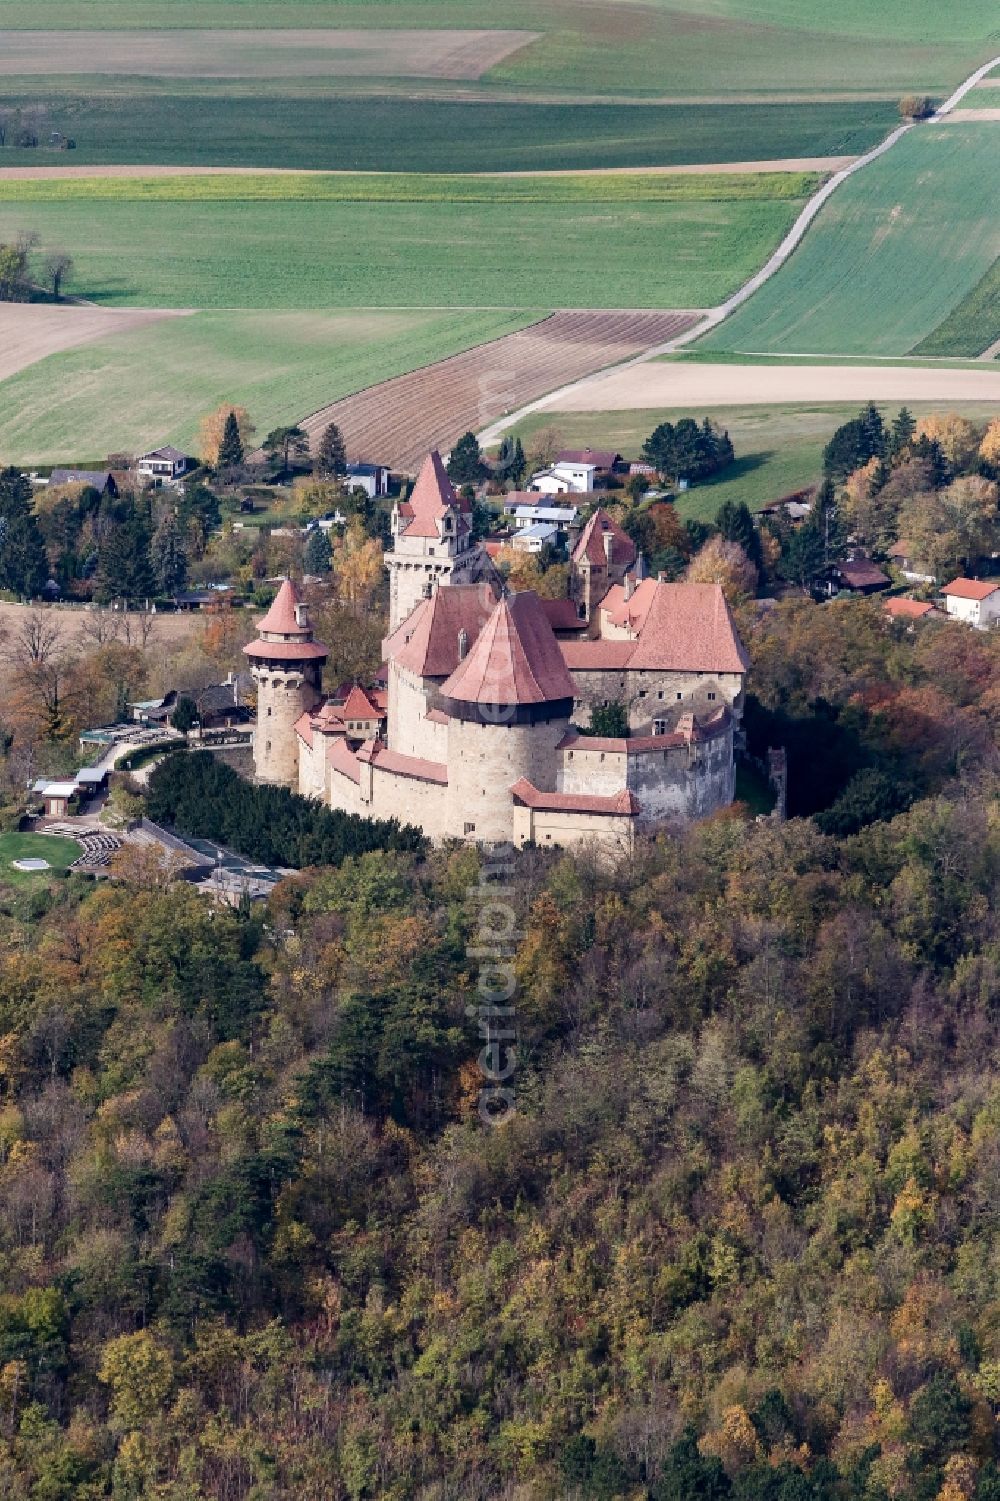 Aerial photograph Leobendorf - Castle of Burg Kreuzenstein in Leobendorf in Lower Austria, Austria